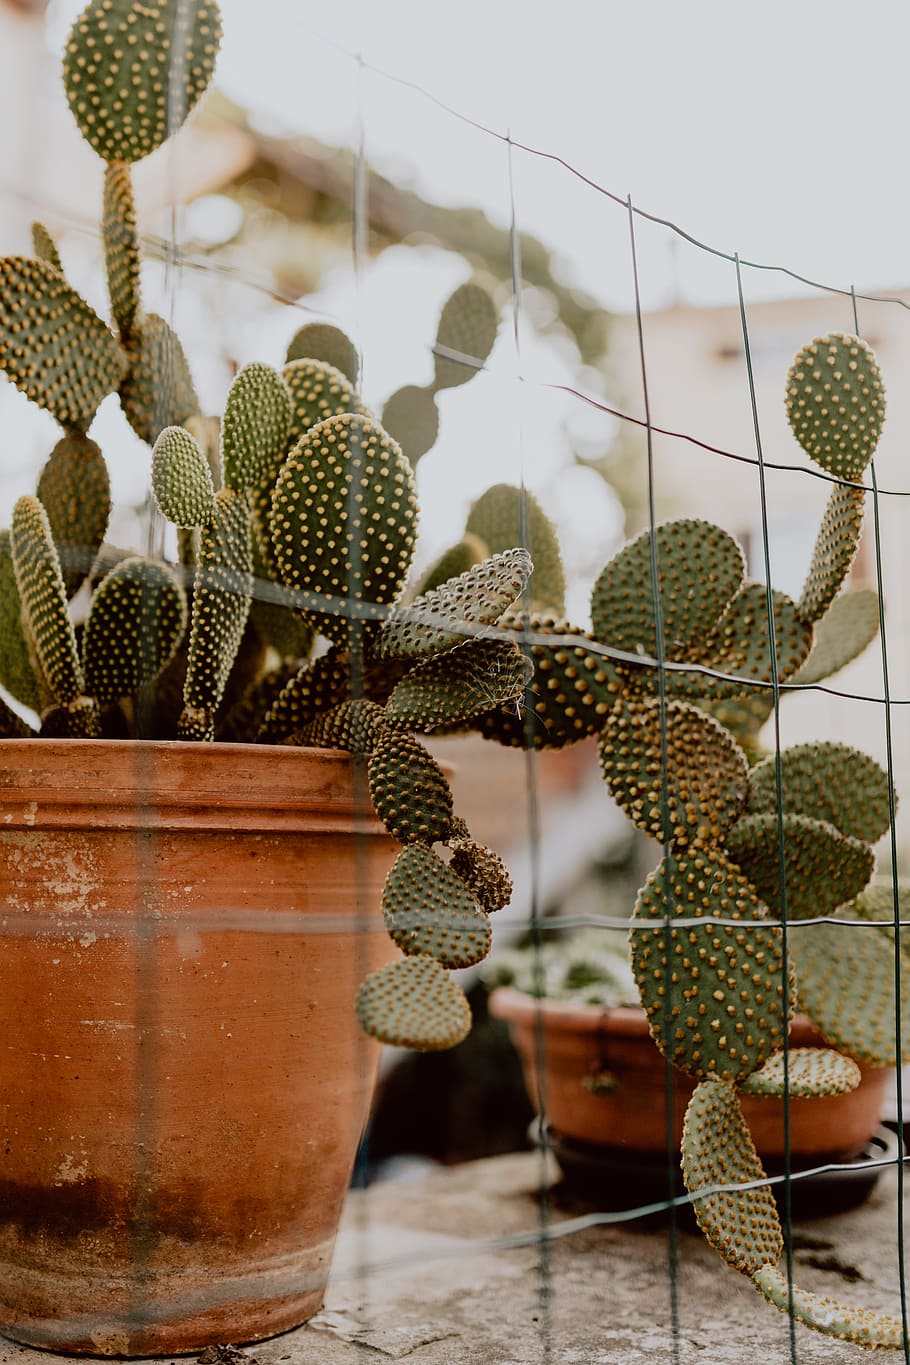 HD wallpaper: Opuntia in a ceramic pot, cactus, cacti, Prickly pear, plant